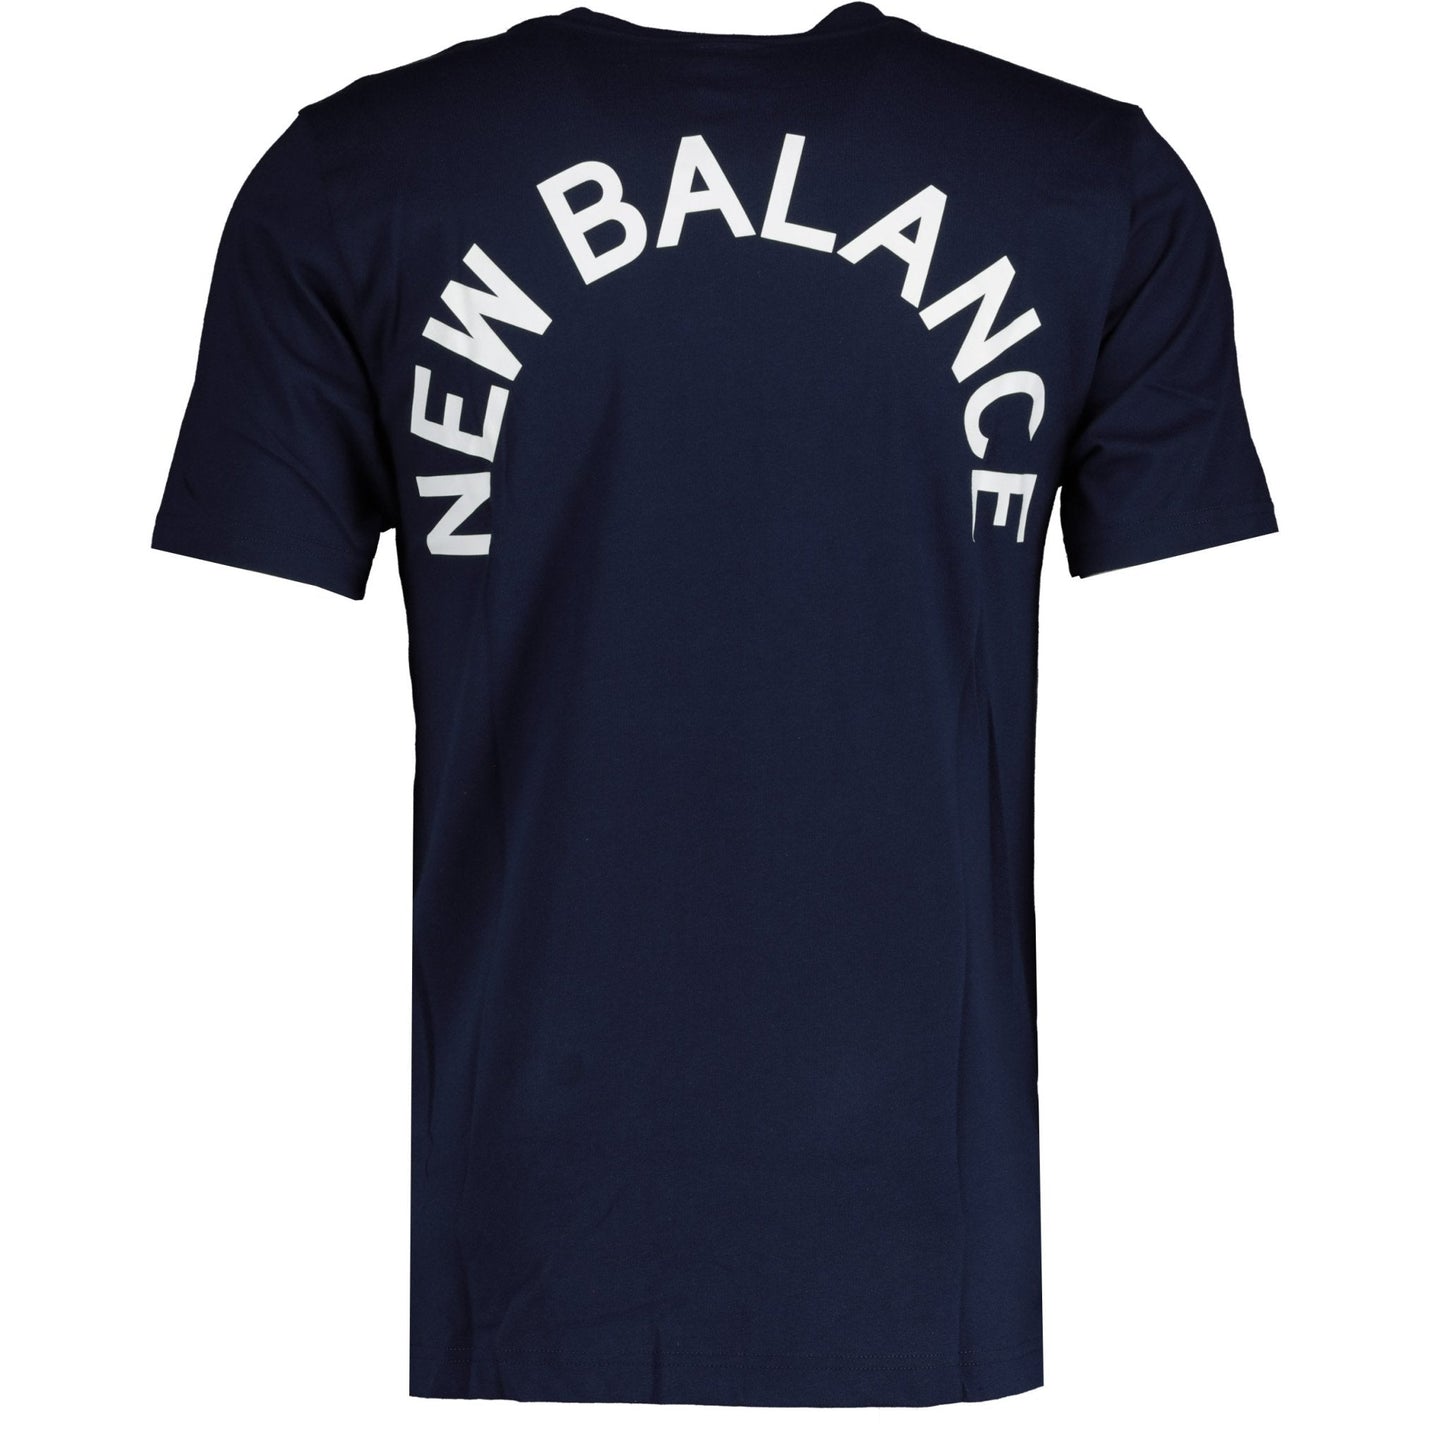 New Balance Cotton T-Shirt Navy - LinkFashionco